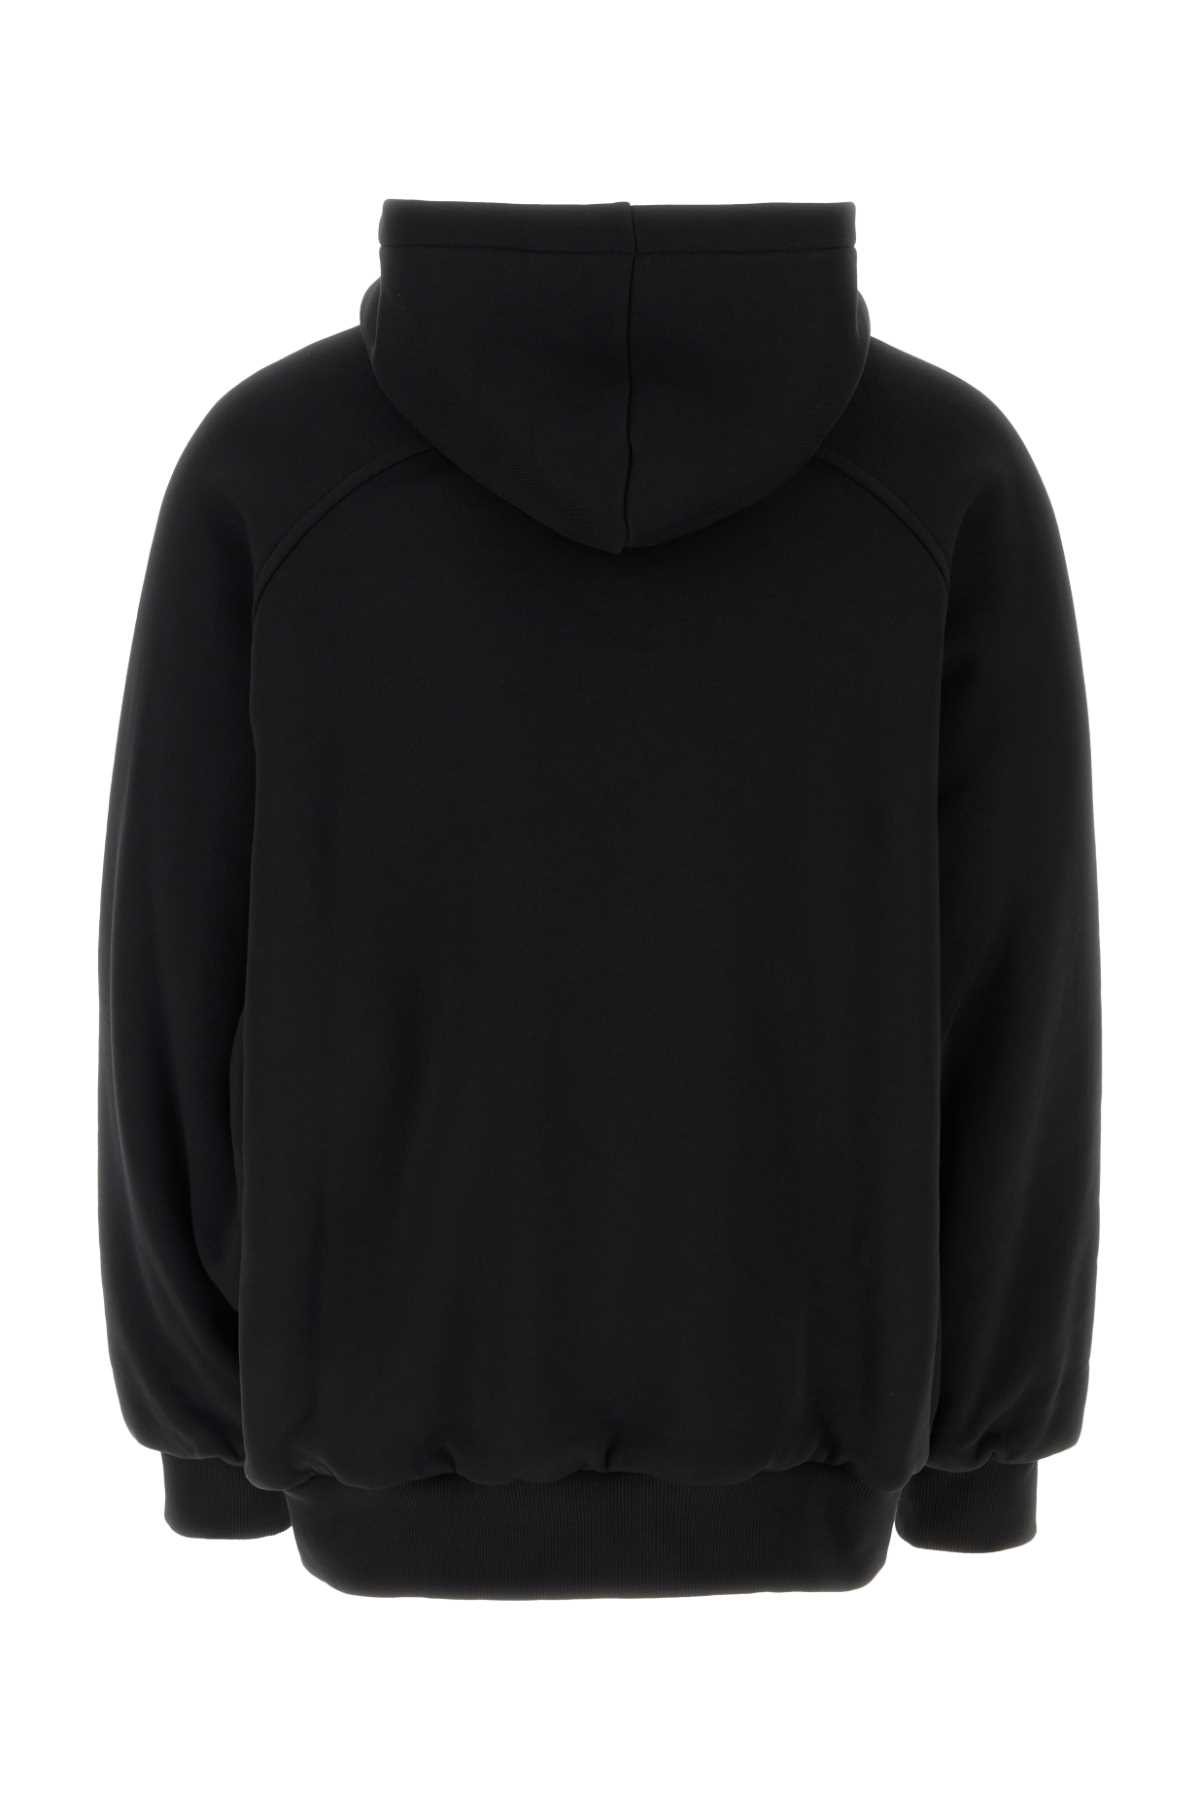 Shop Alyx Black Cotton Sweatshirt